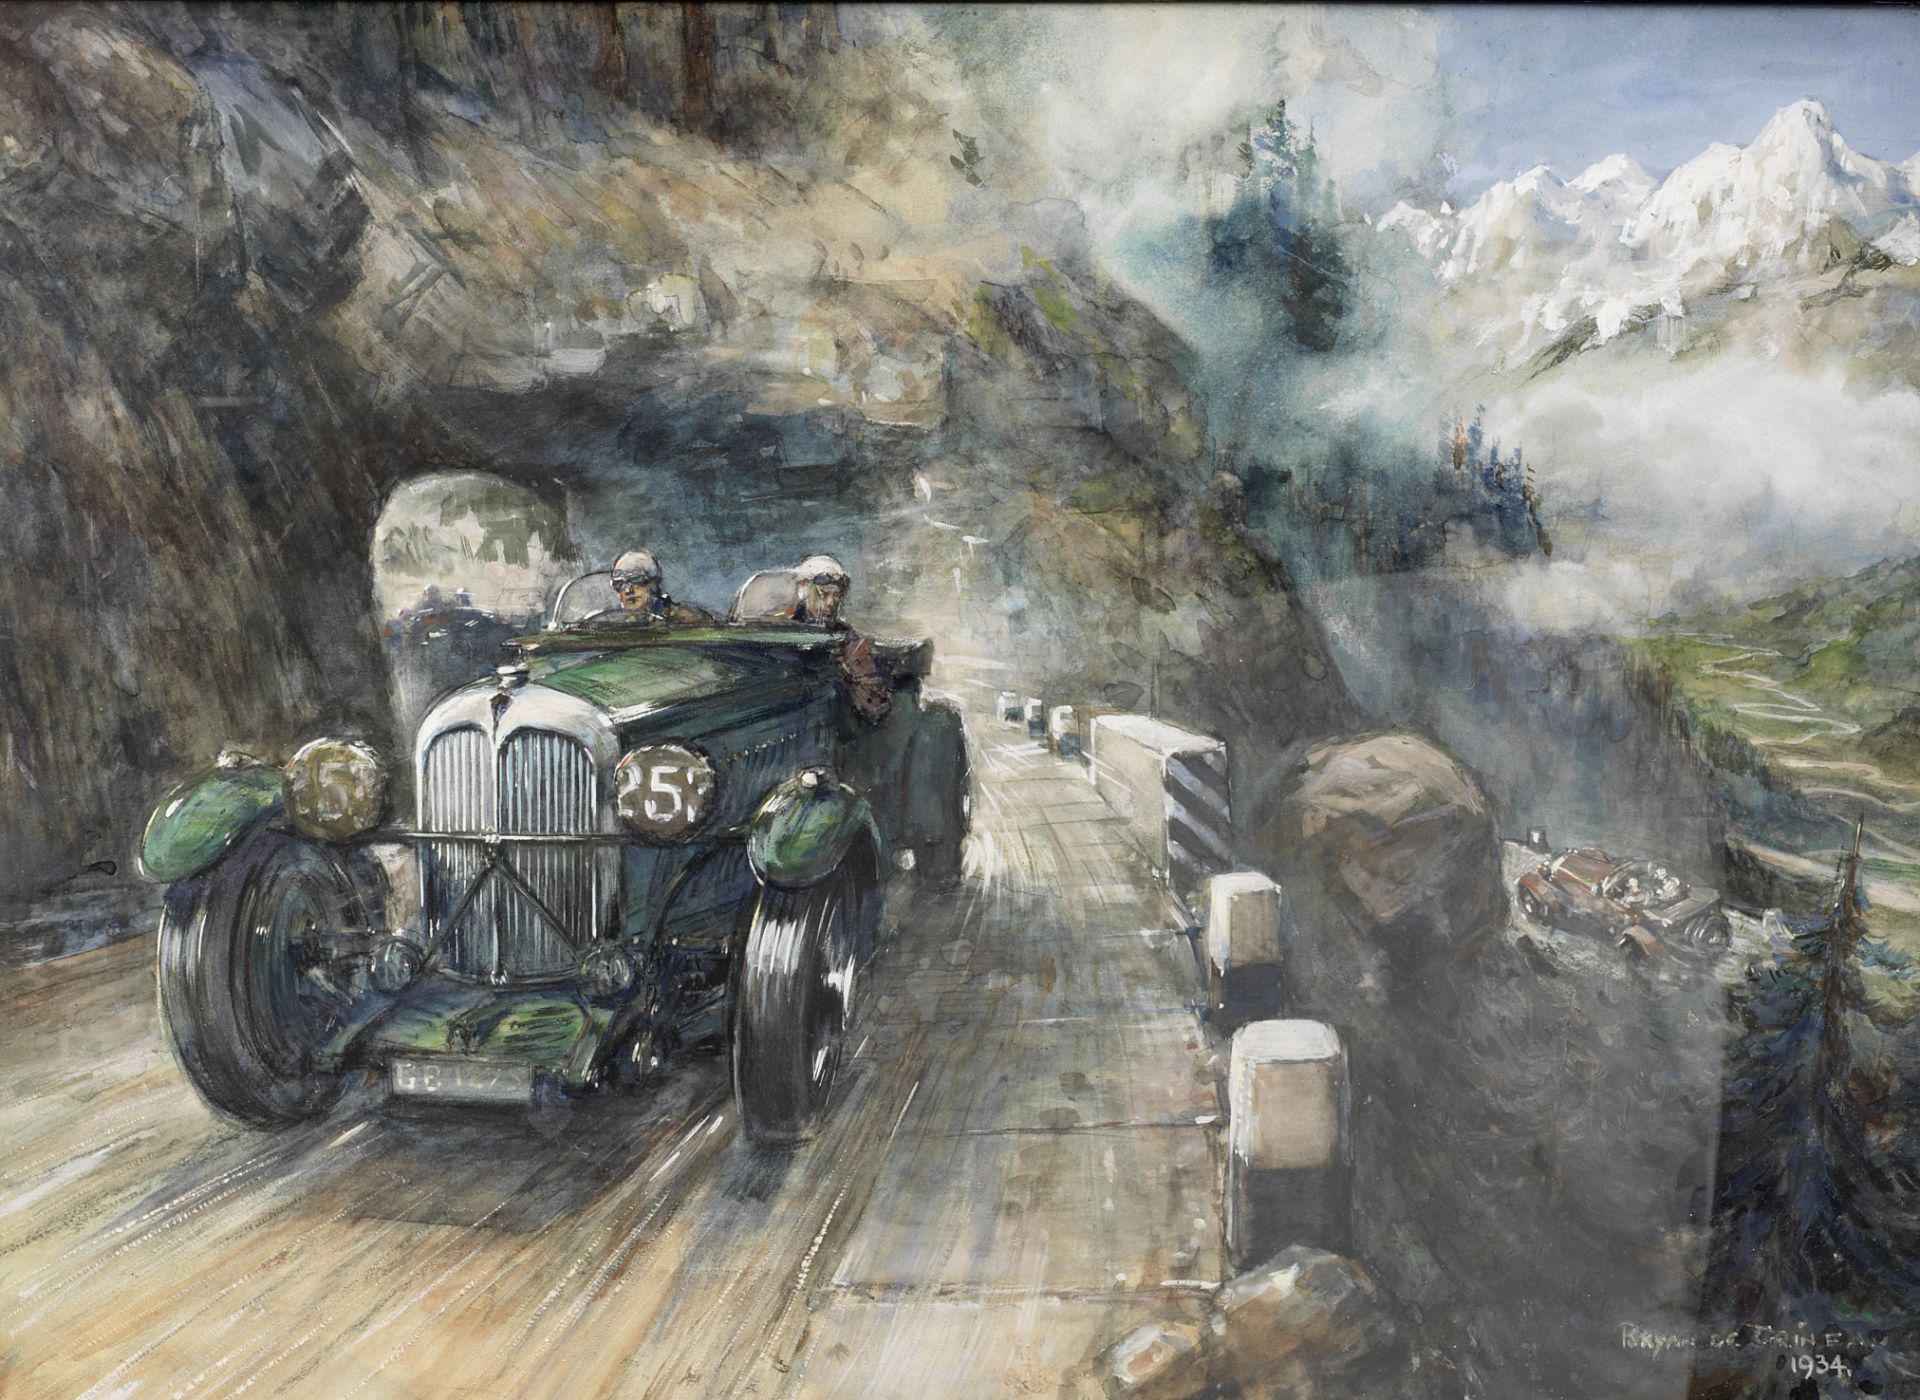 Bryan de Grineau (1883-1957), 'Alpine Trials Rally',